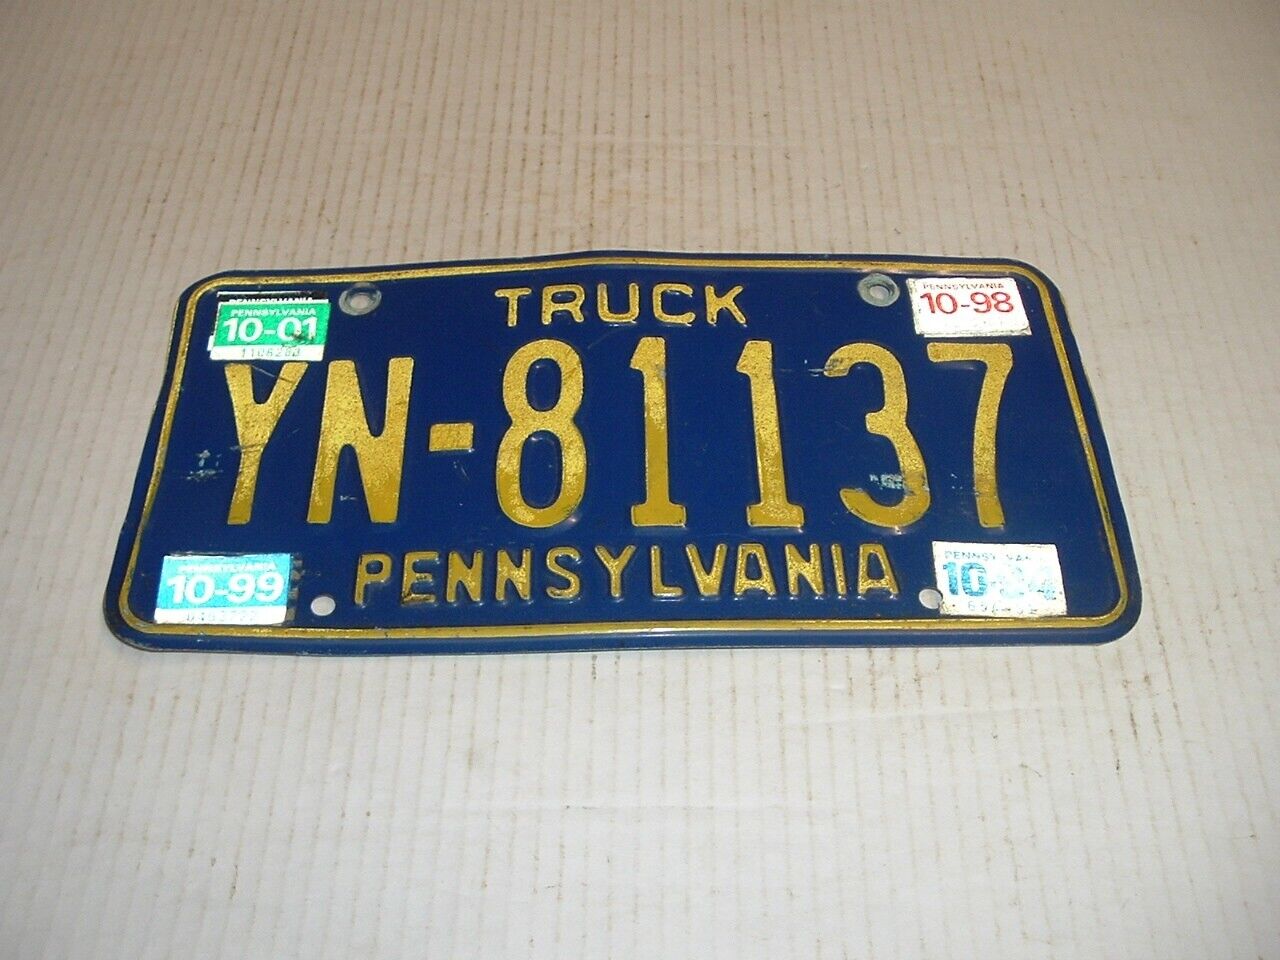 Pennsylvania 2001 Truck License Plate YN 81137